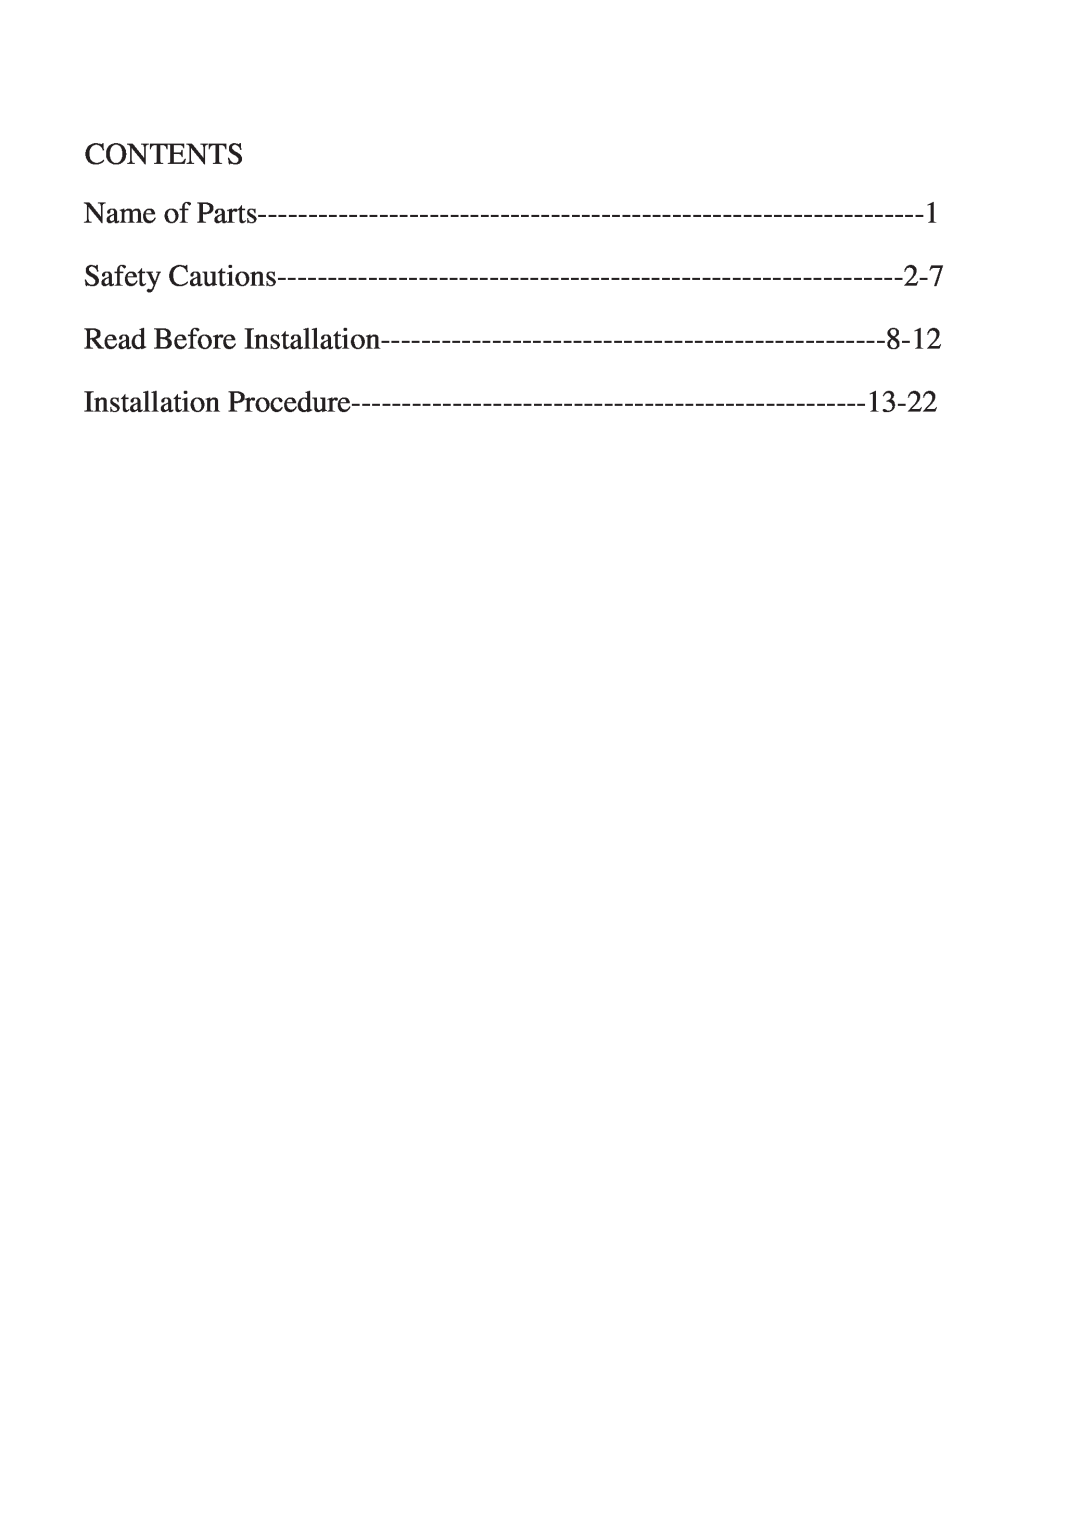 Haier AU362AHERA, AU182AFERA Contents, Read Before Installation, 8-12, Installation Procedure, 13-22, Safety Cautions 